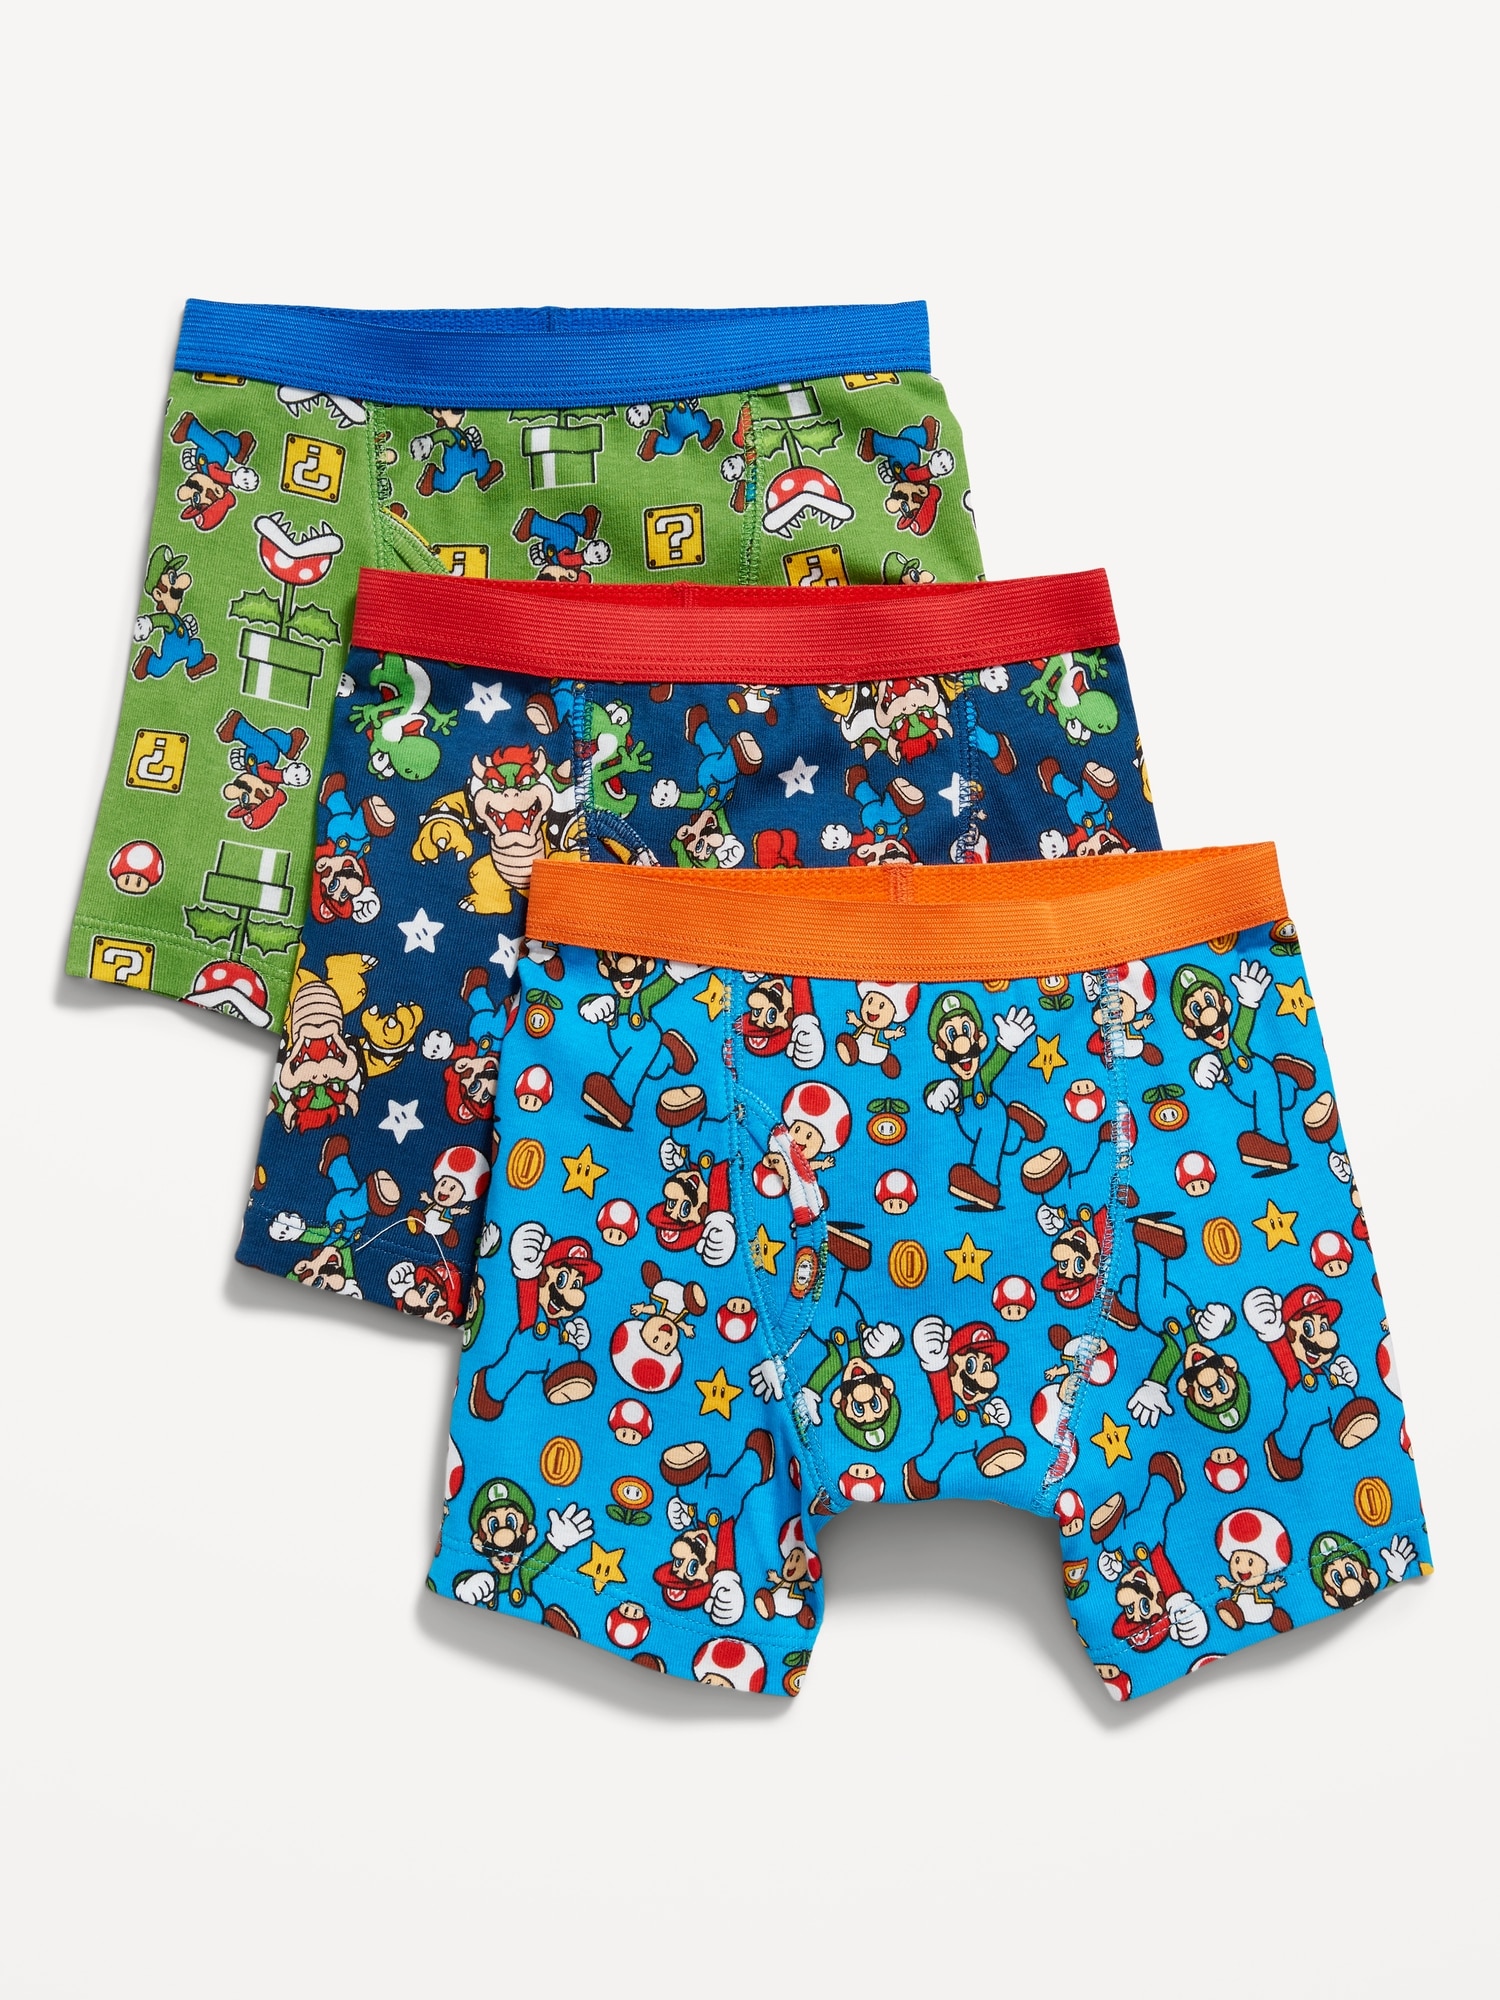 Paw Patrol Boys Boxer Briefs Underwear 3 Pairs Size SM 6 Cartoon